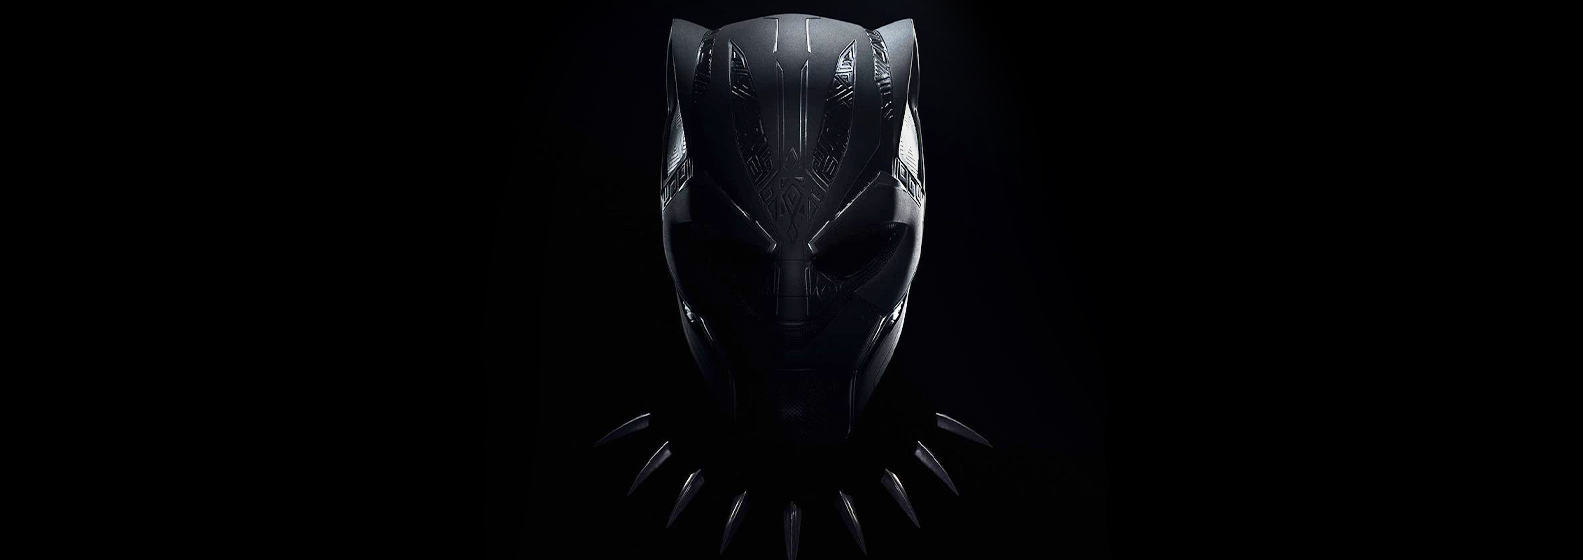 Black Panther: Wakanda Forever - Header Image